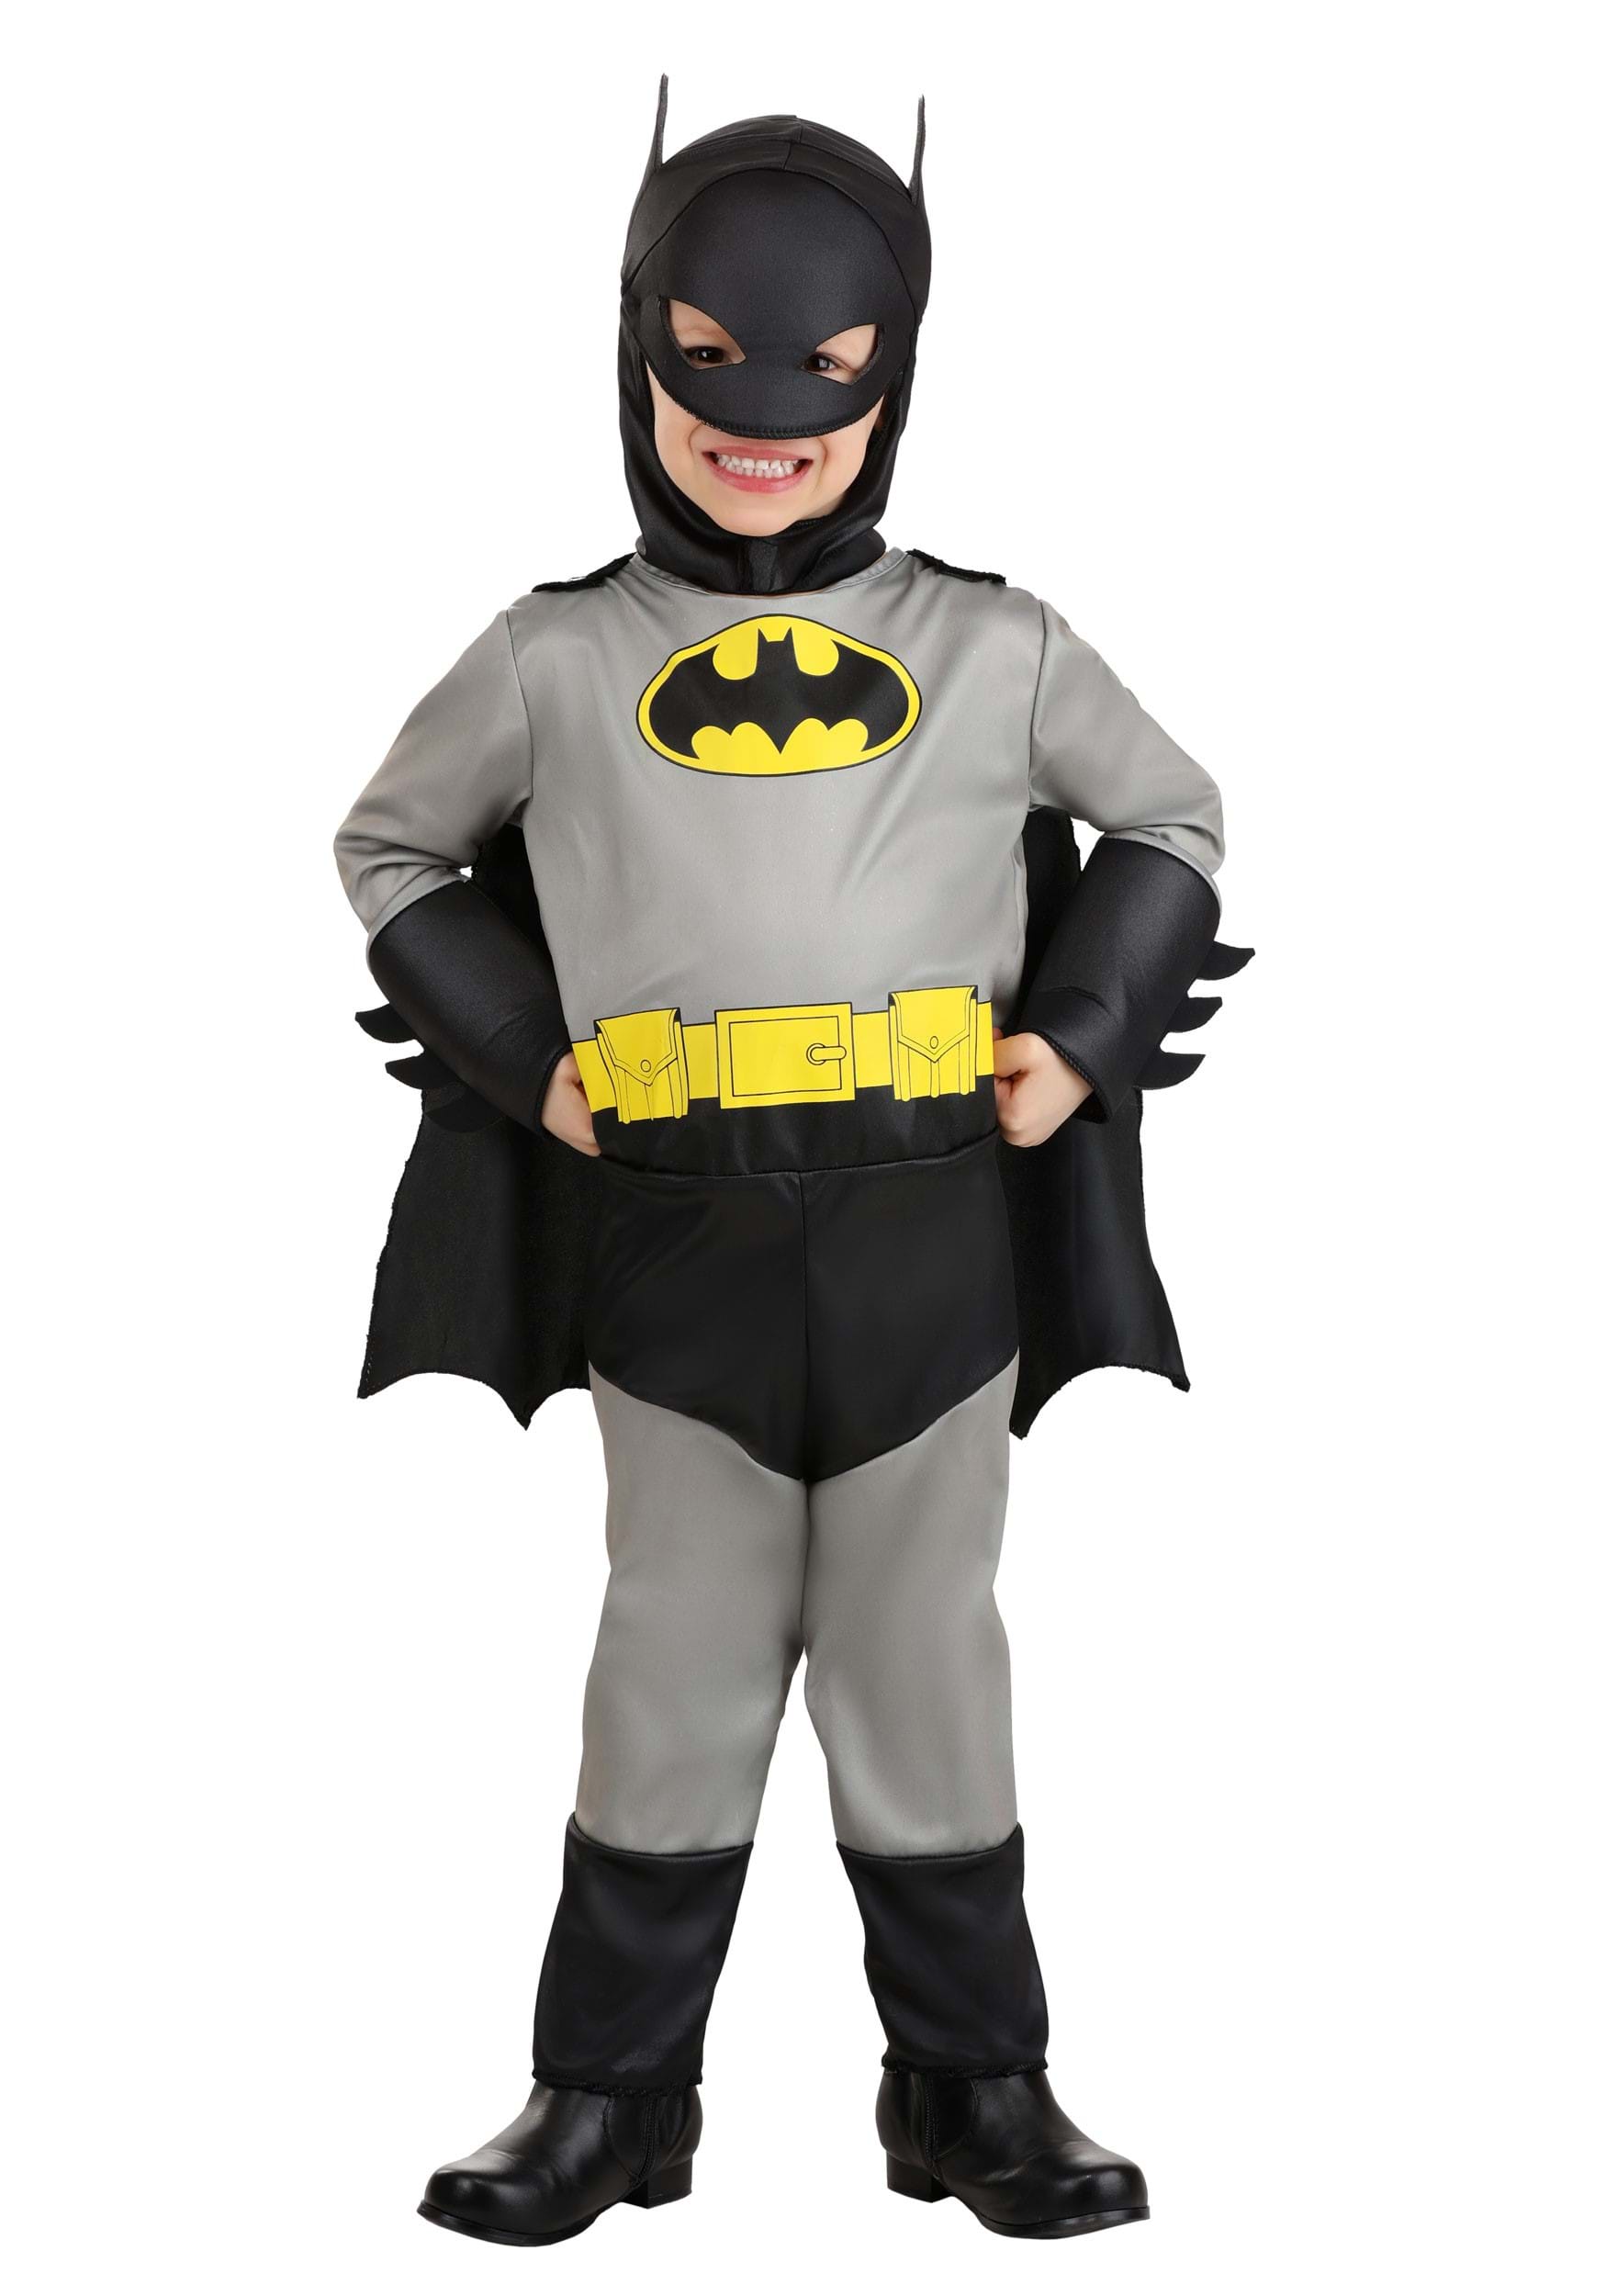 https://images.fun.com/products/74238/1-1/classic-batman-toddler-costume.jpg